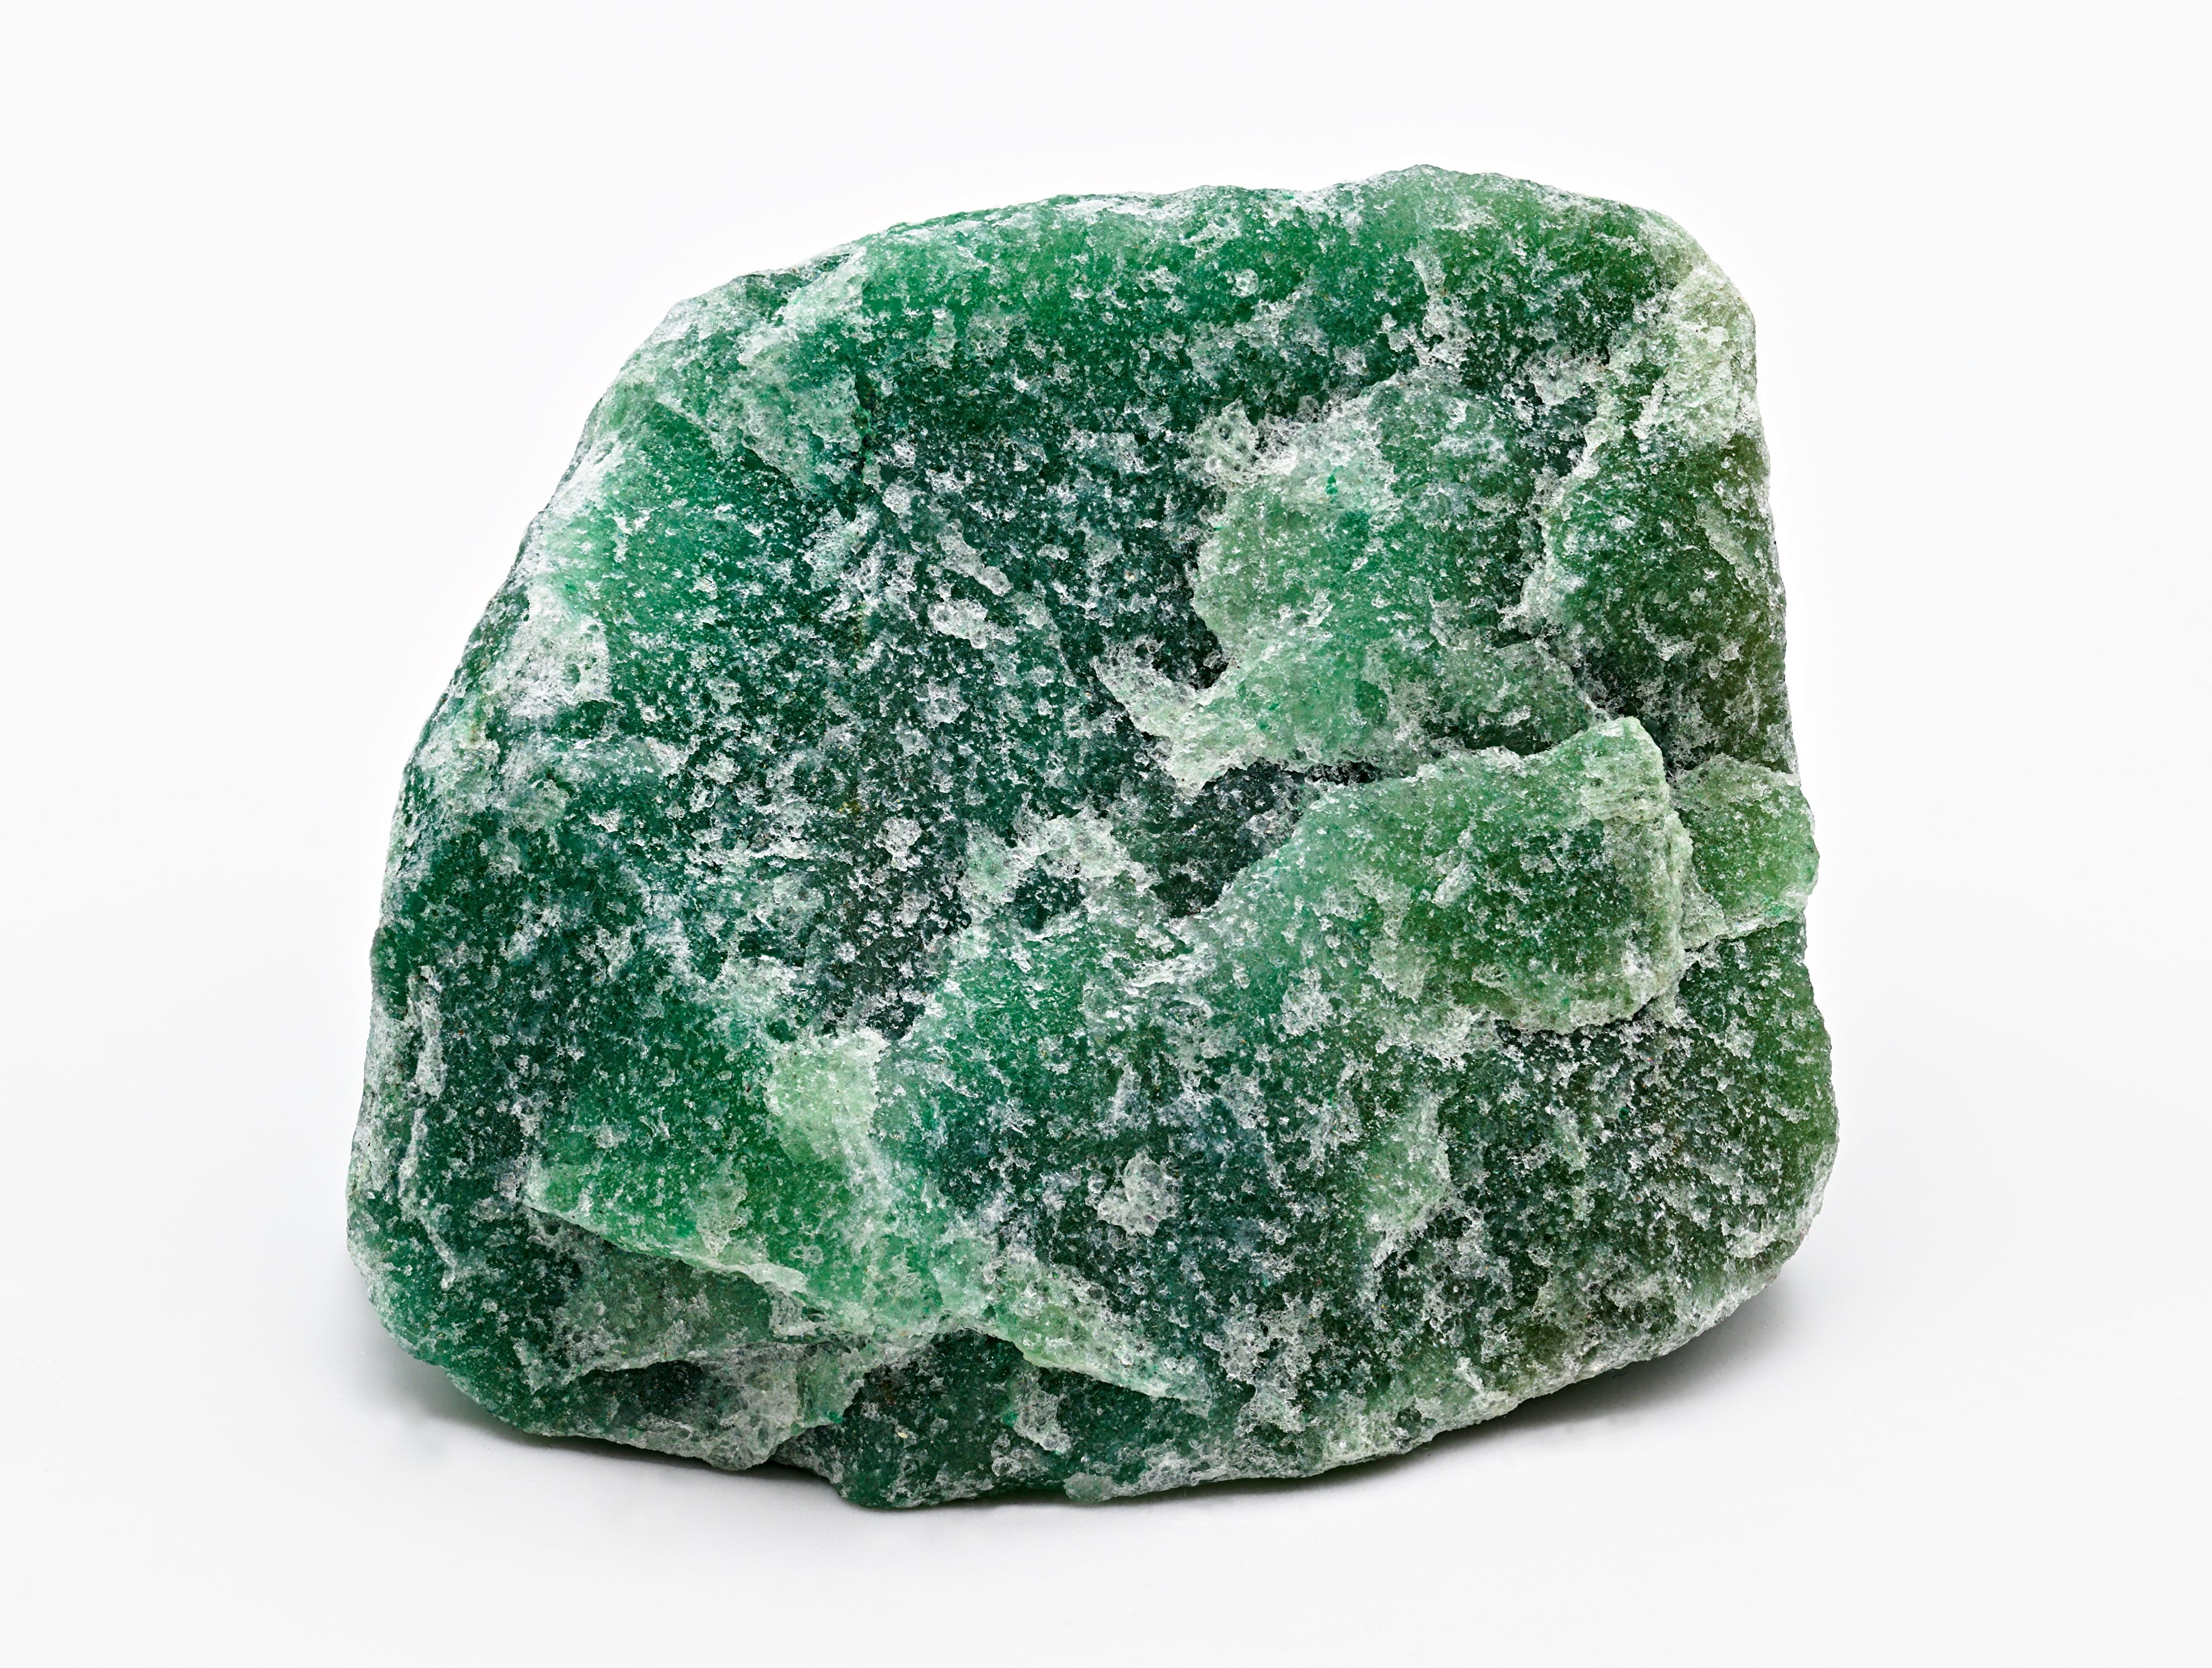 Green aventurine crystal | Shutterstock